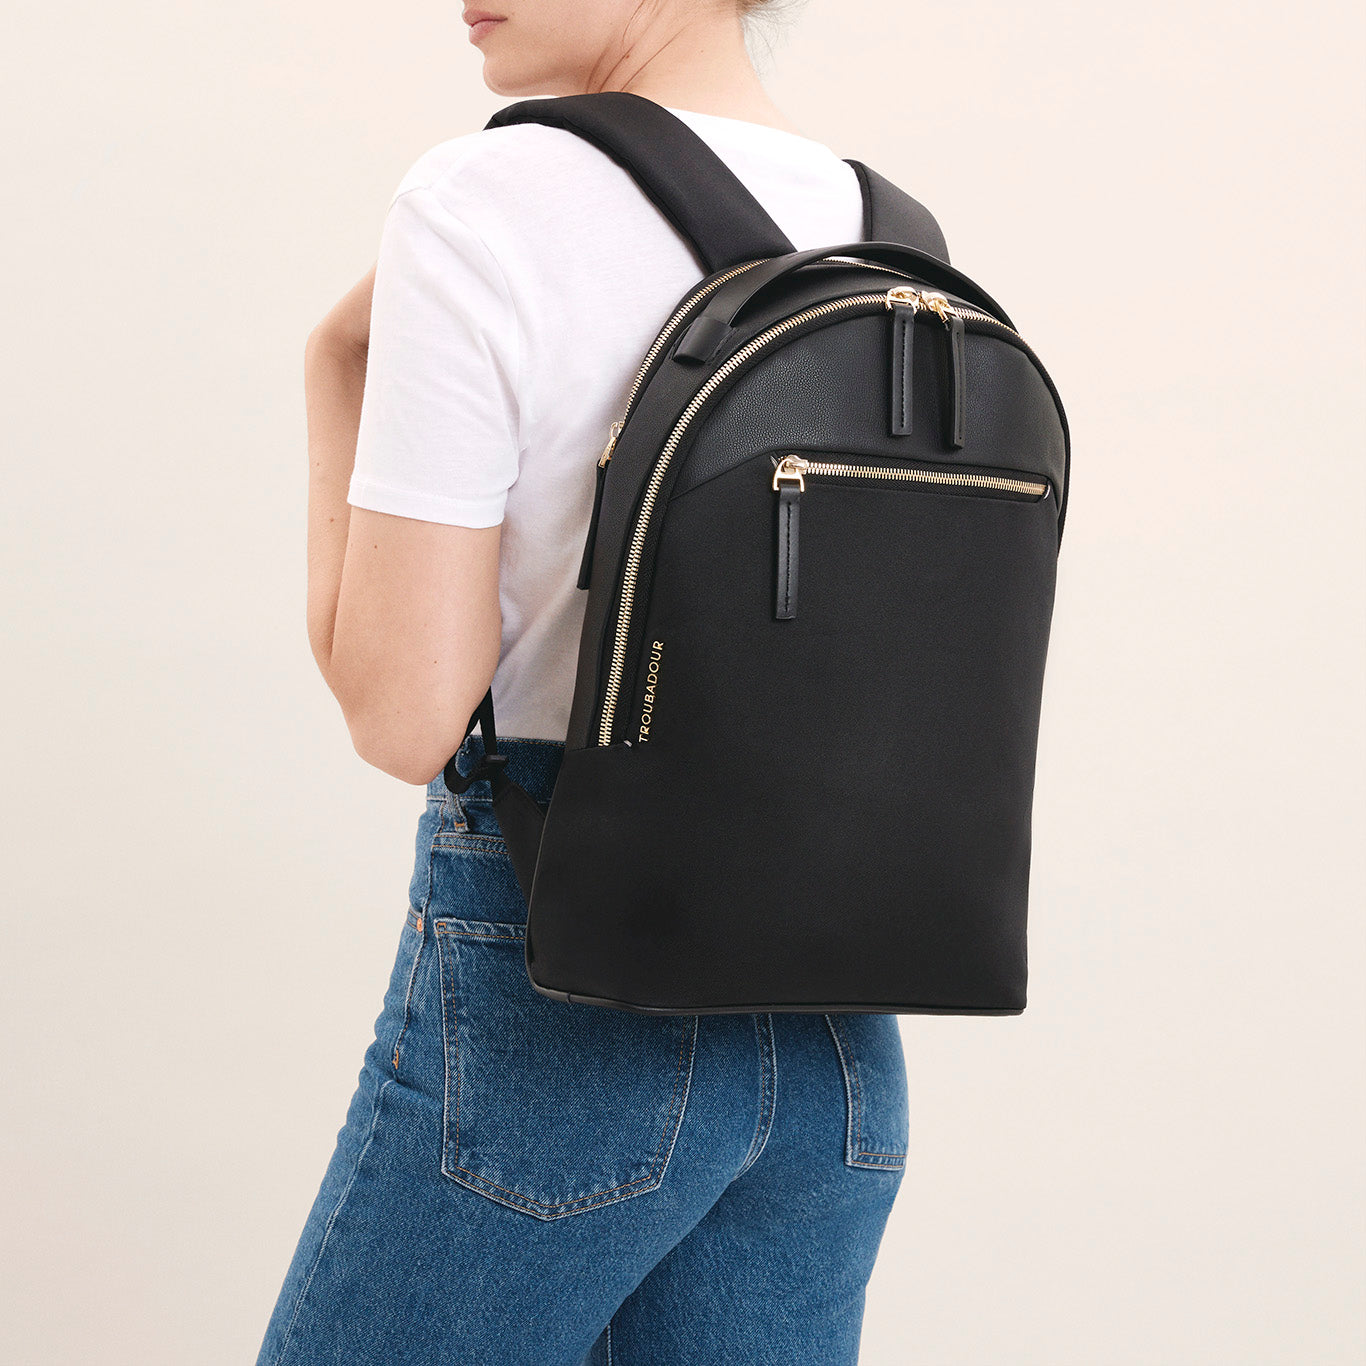 VEGAN Leather & Sky Blue Fabric Laptop Messenger Bag For Women, Size: Medium